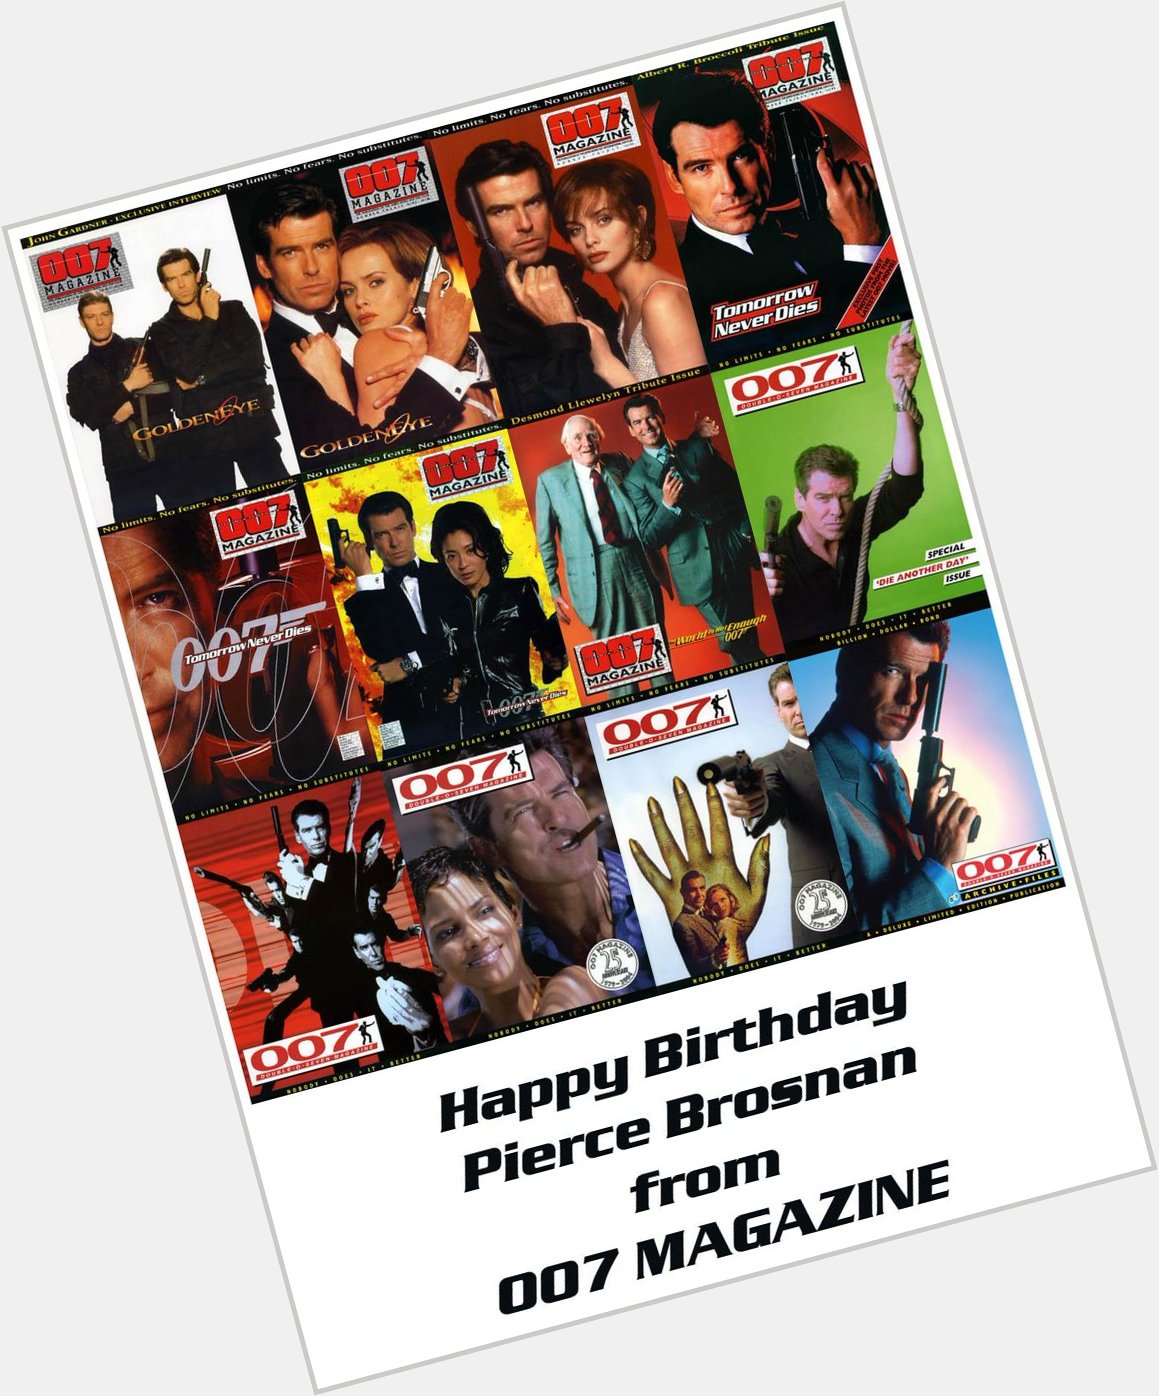 Happy Birthday Pierce Brosnan from 007 MAGAZINE
 